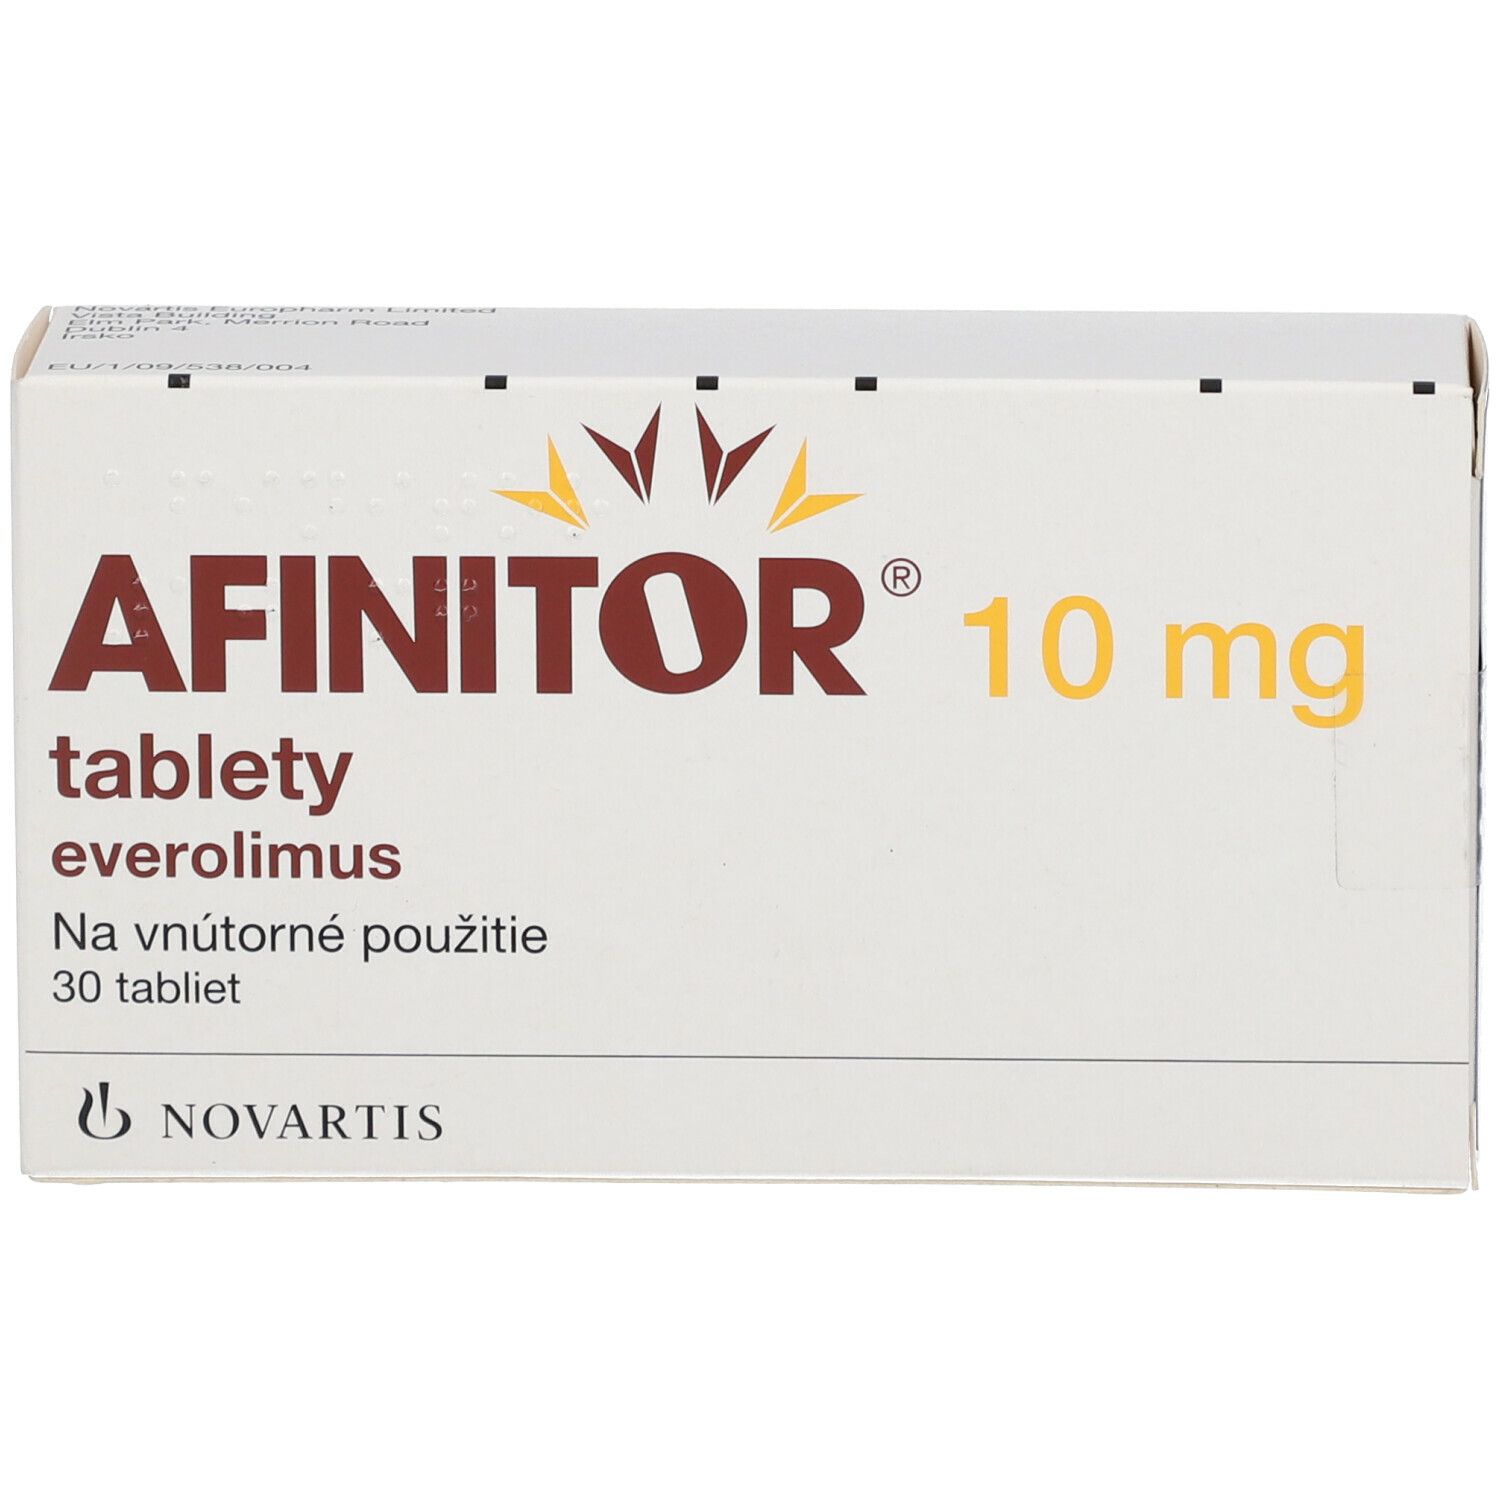 AFINITOR® 10 mg